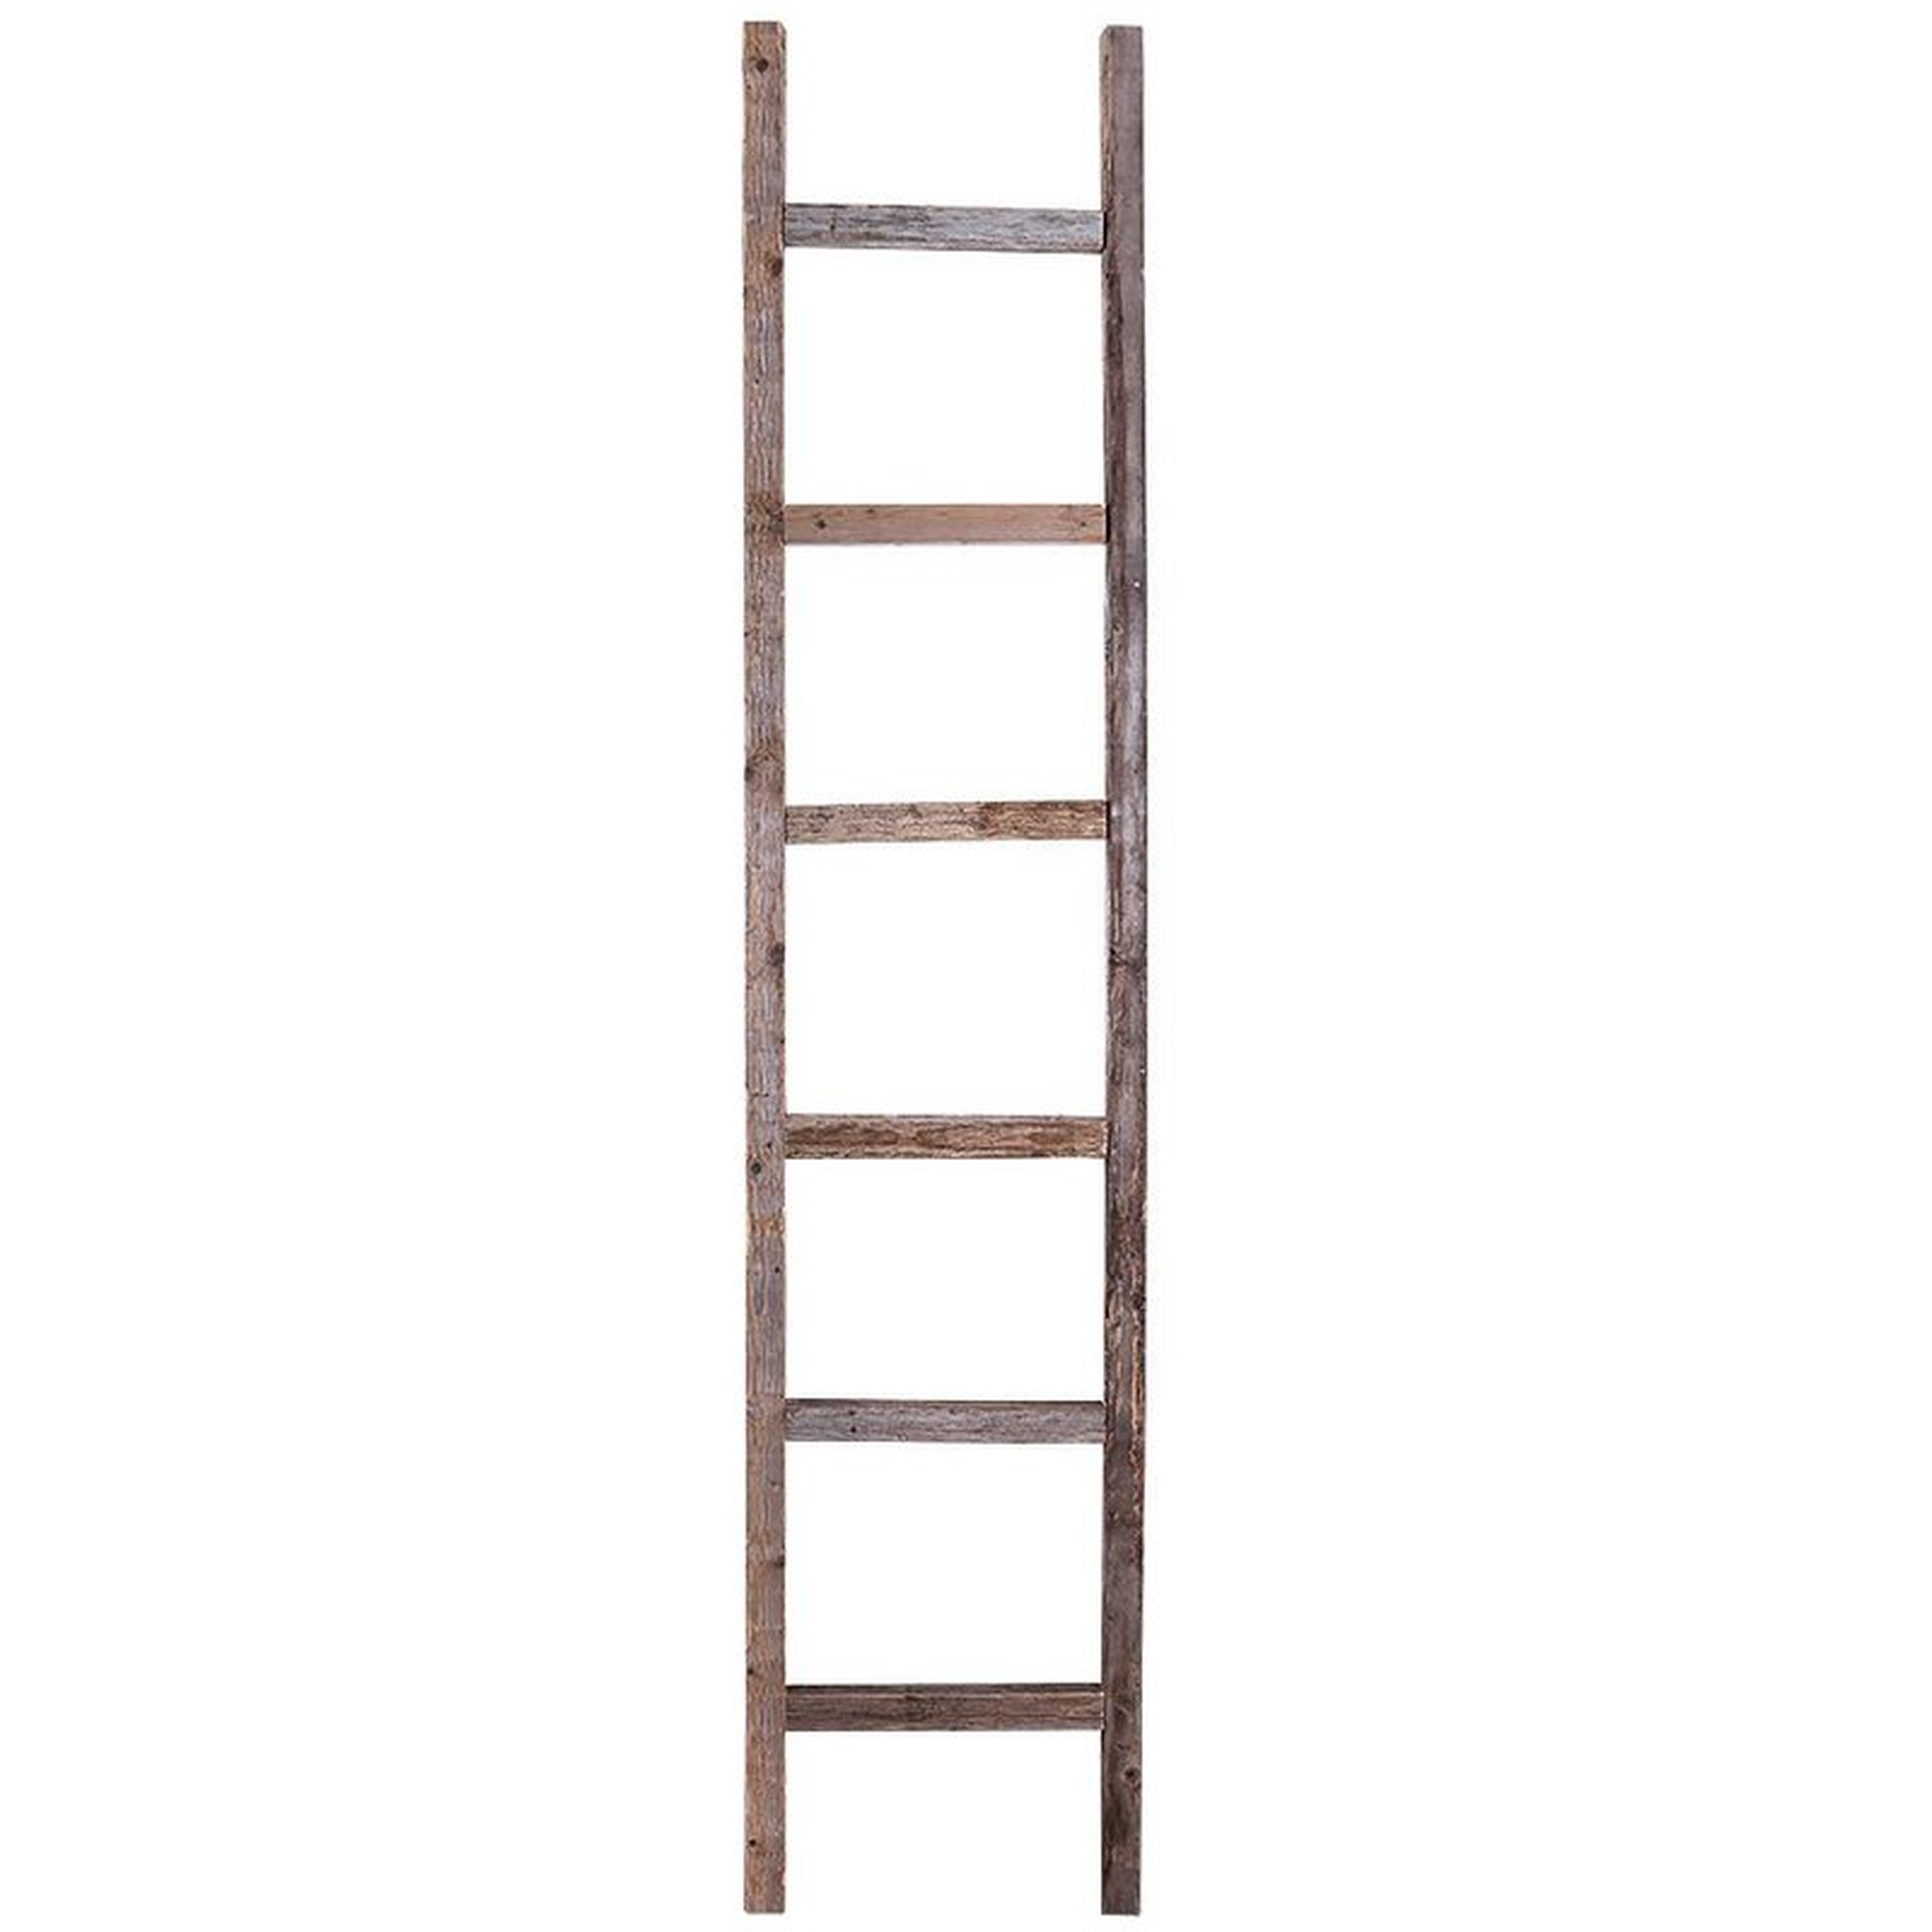 Rustic 6 ft Decorative Ladder - Wayfair